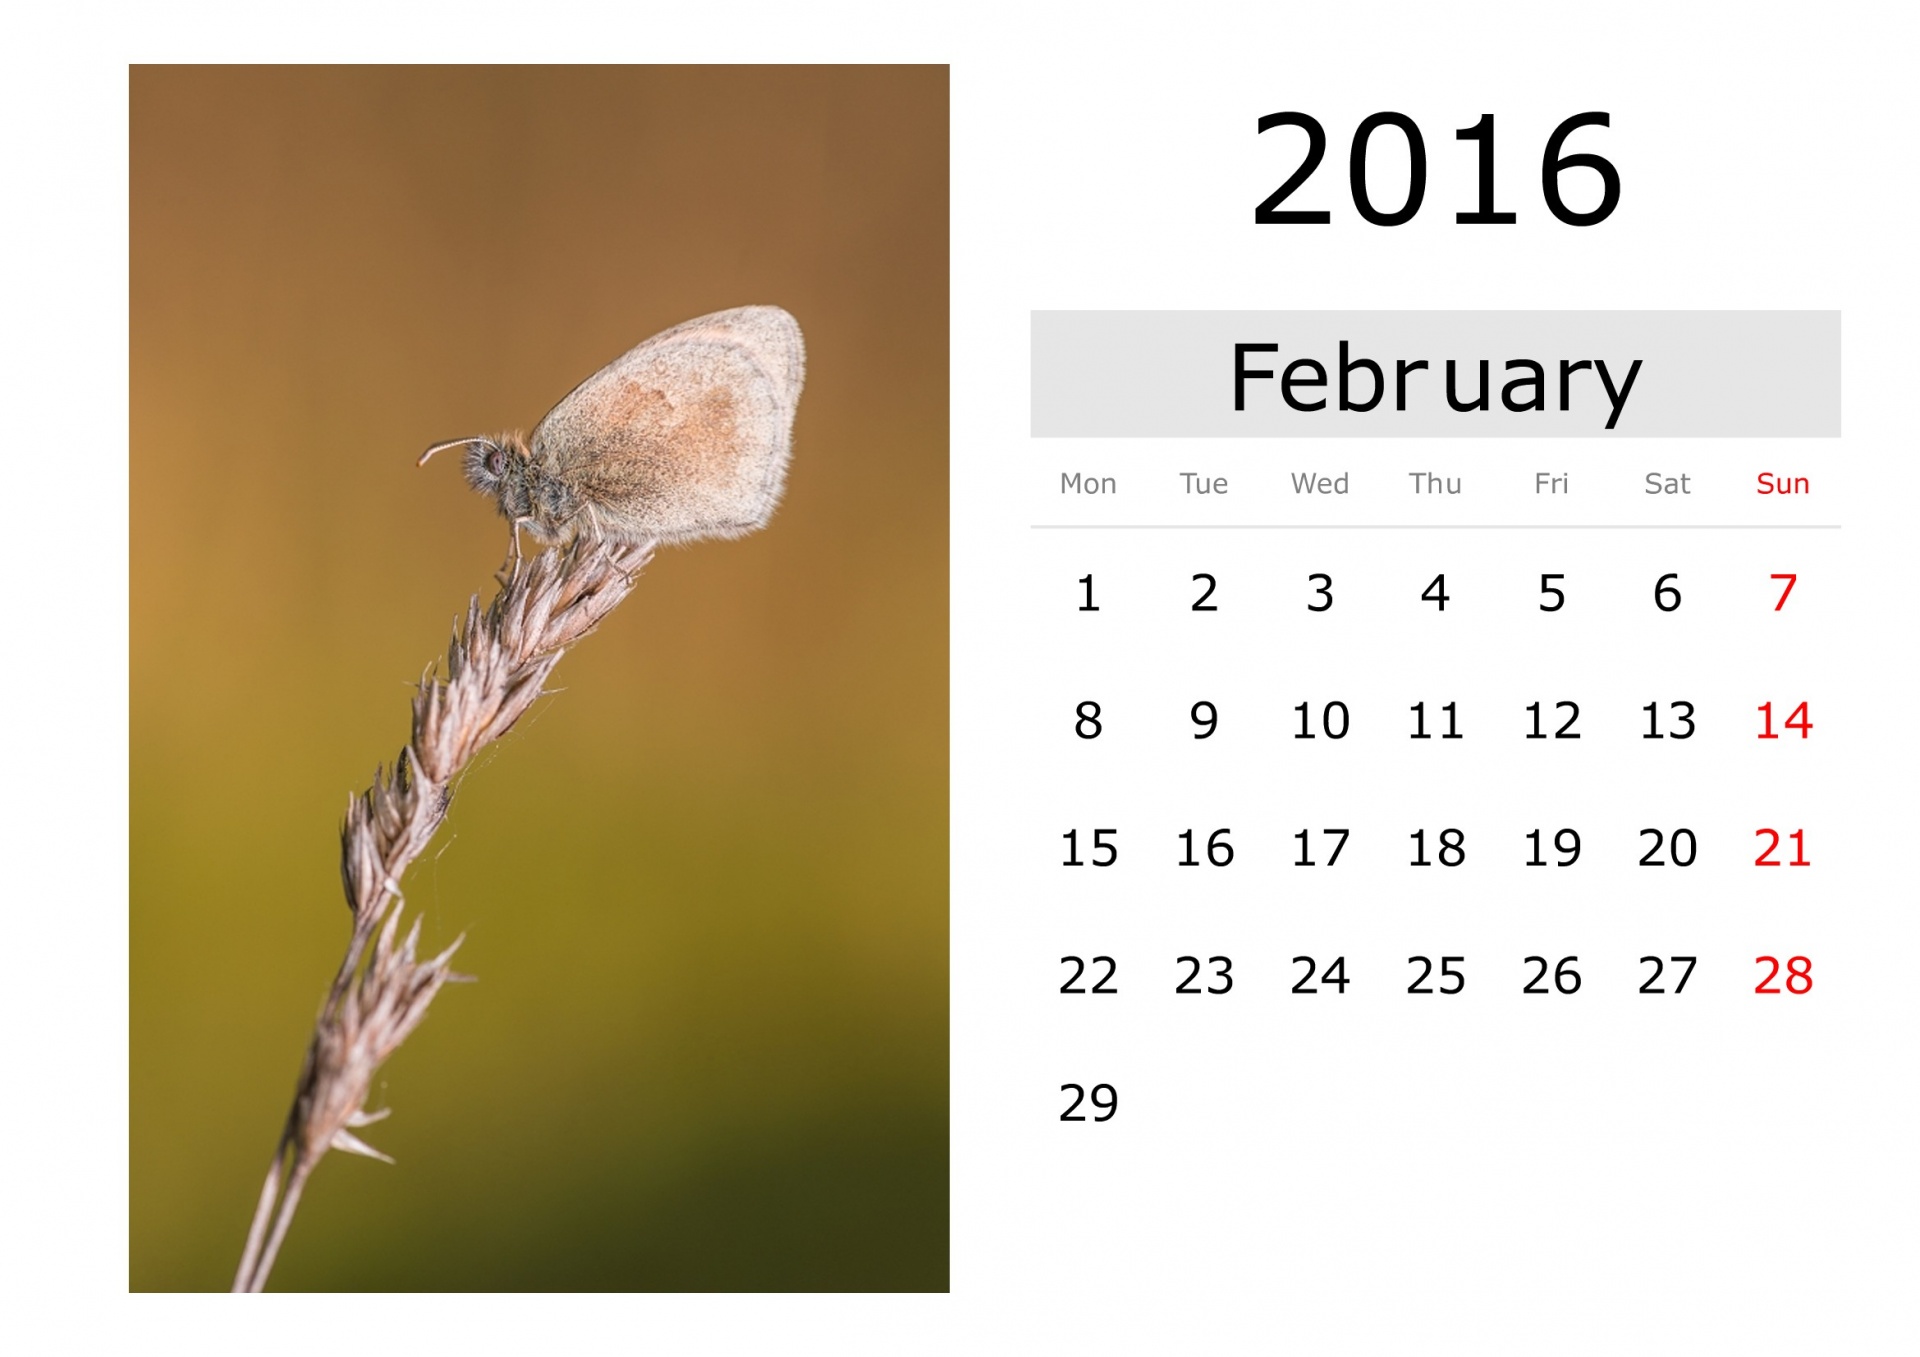 Calendar - February 2016 (English)